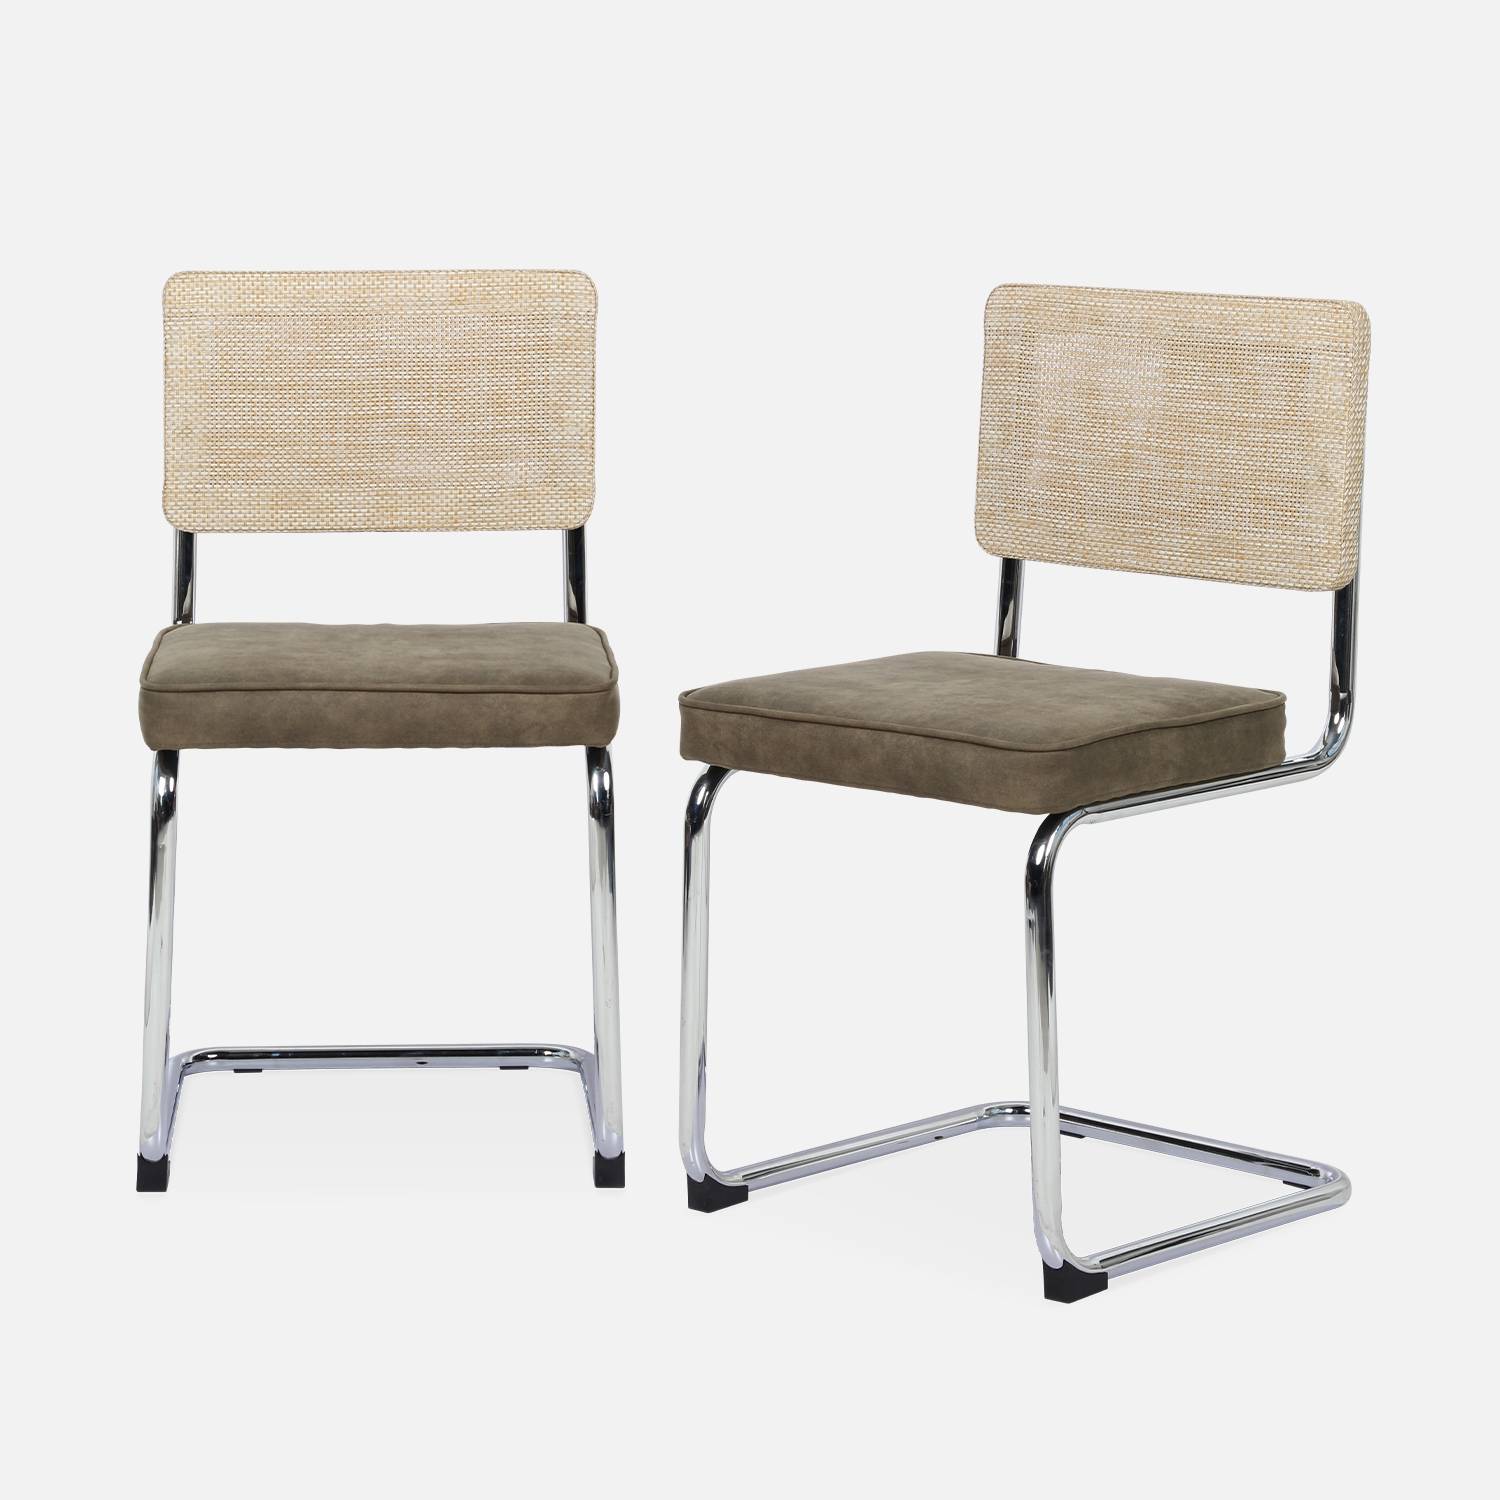 2 sillas cantilever, tela marrón y resina  | sweeek